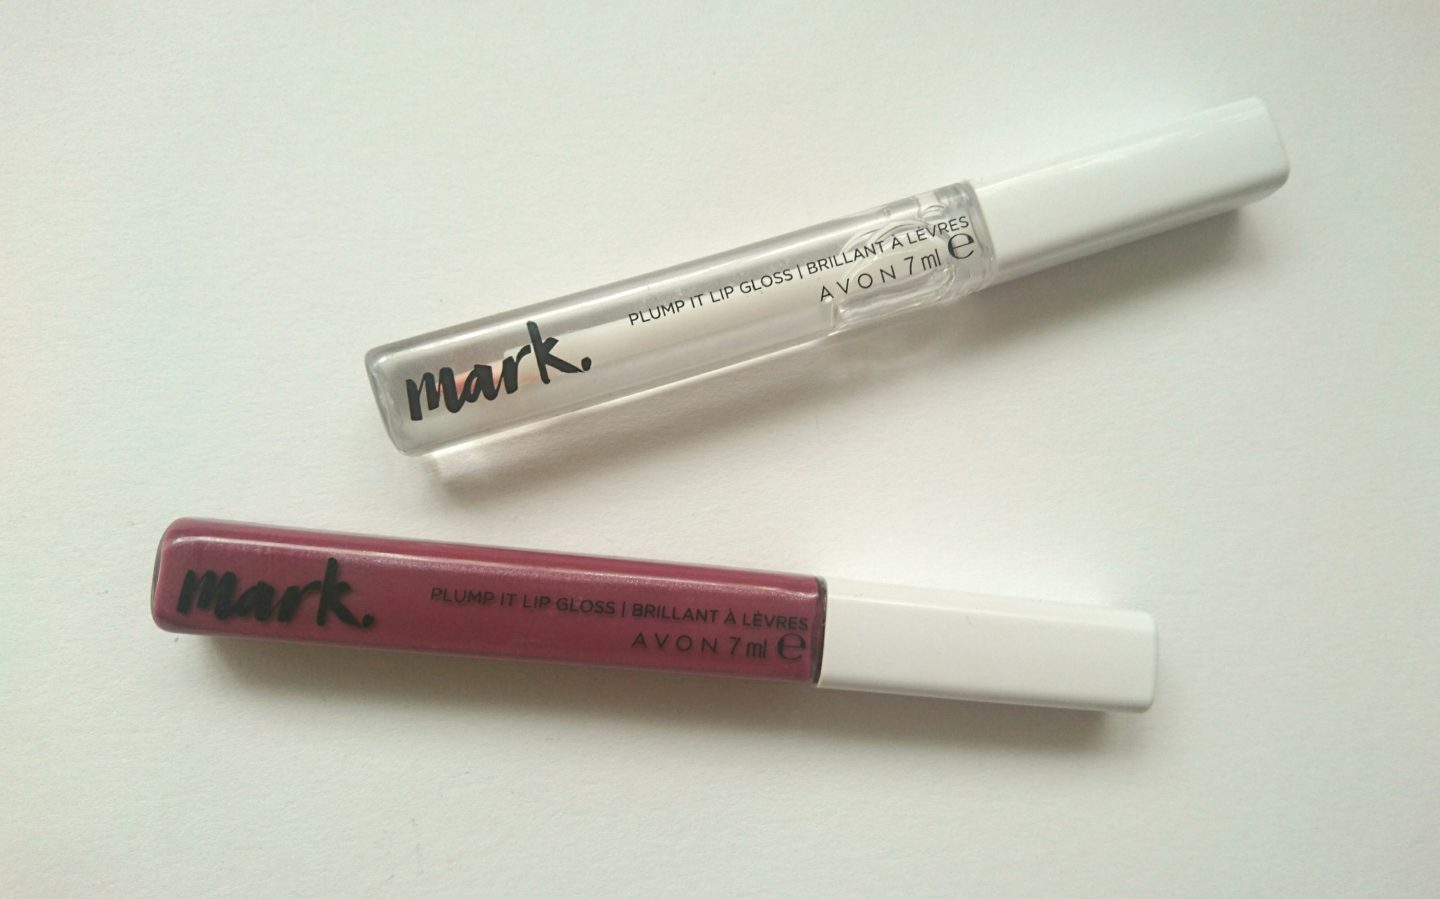 Avon Mark Plump-it lip gloss.